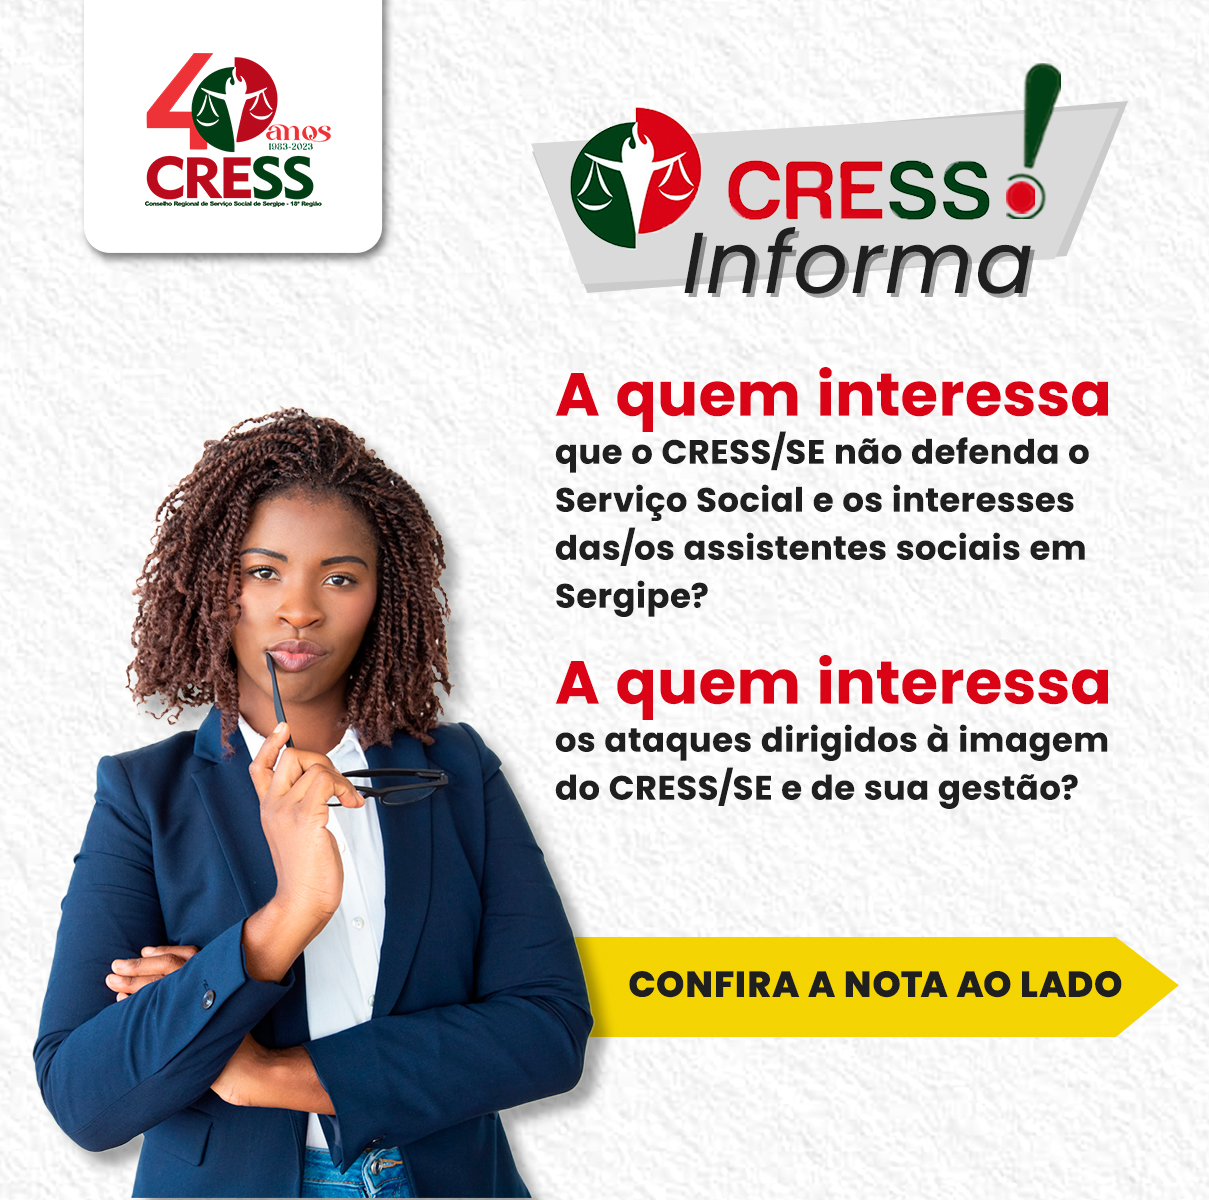 CRESS/SE INFORMA